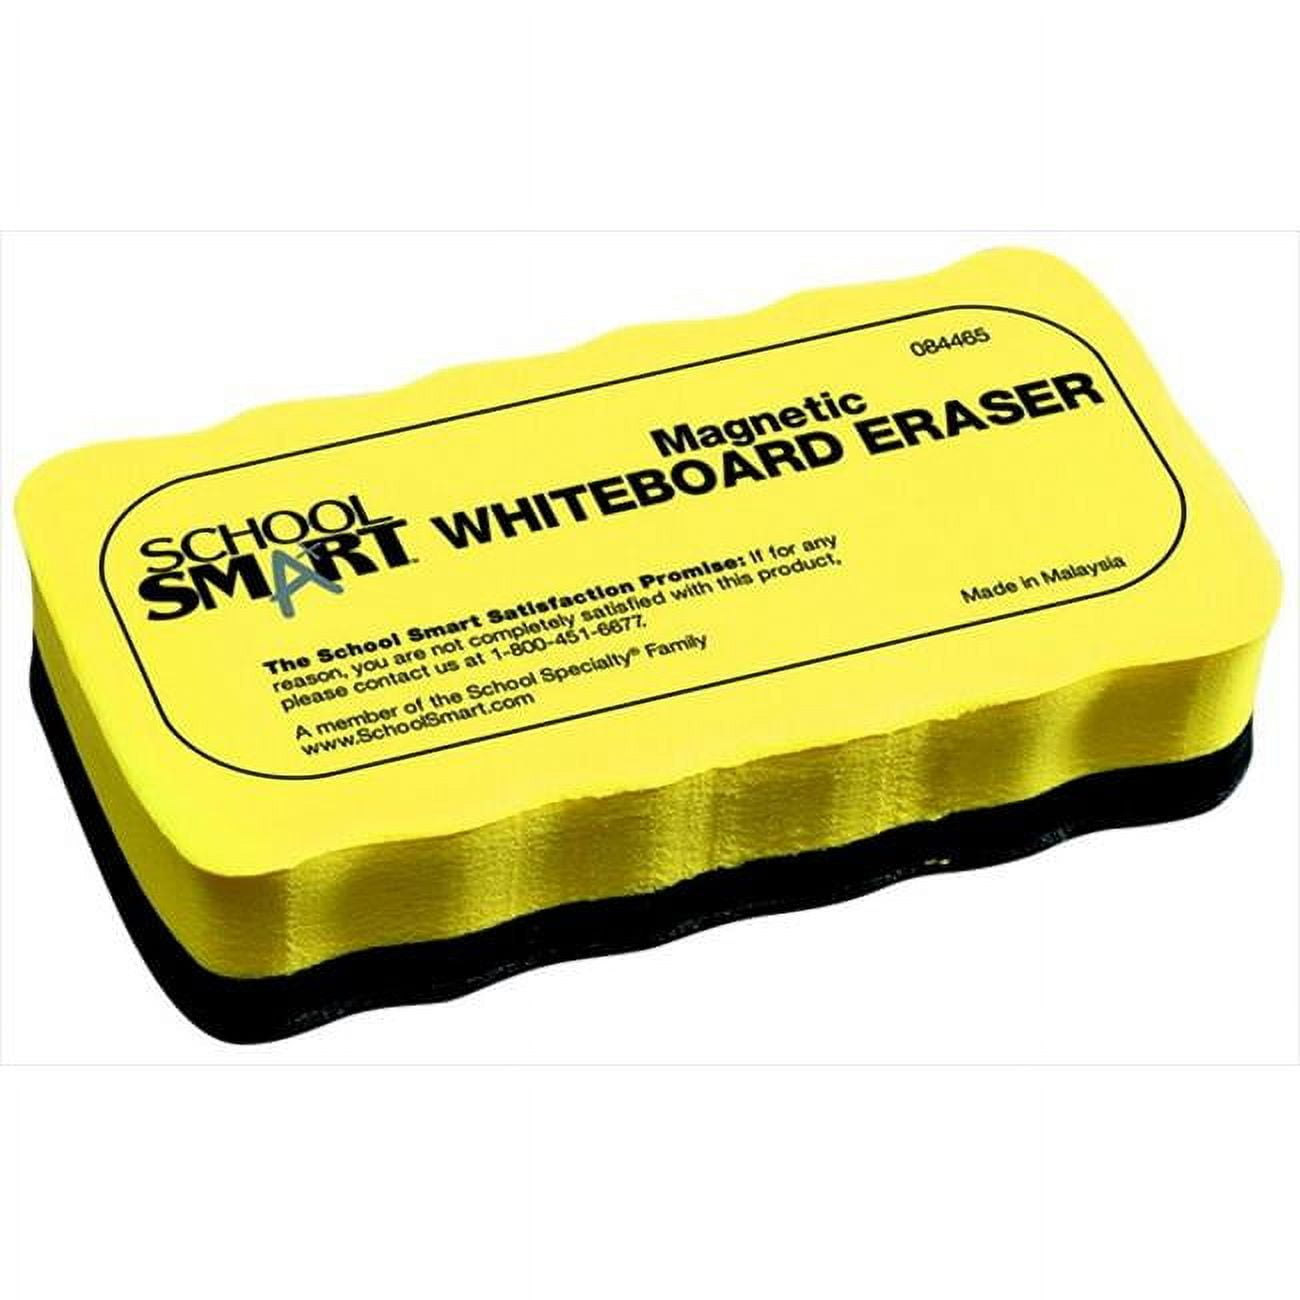 Magnetic Whiteboard Eraser